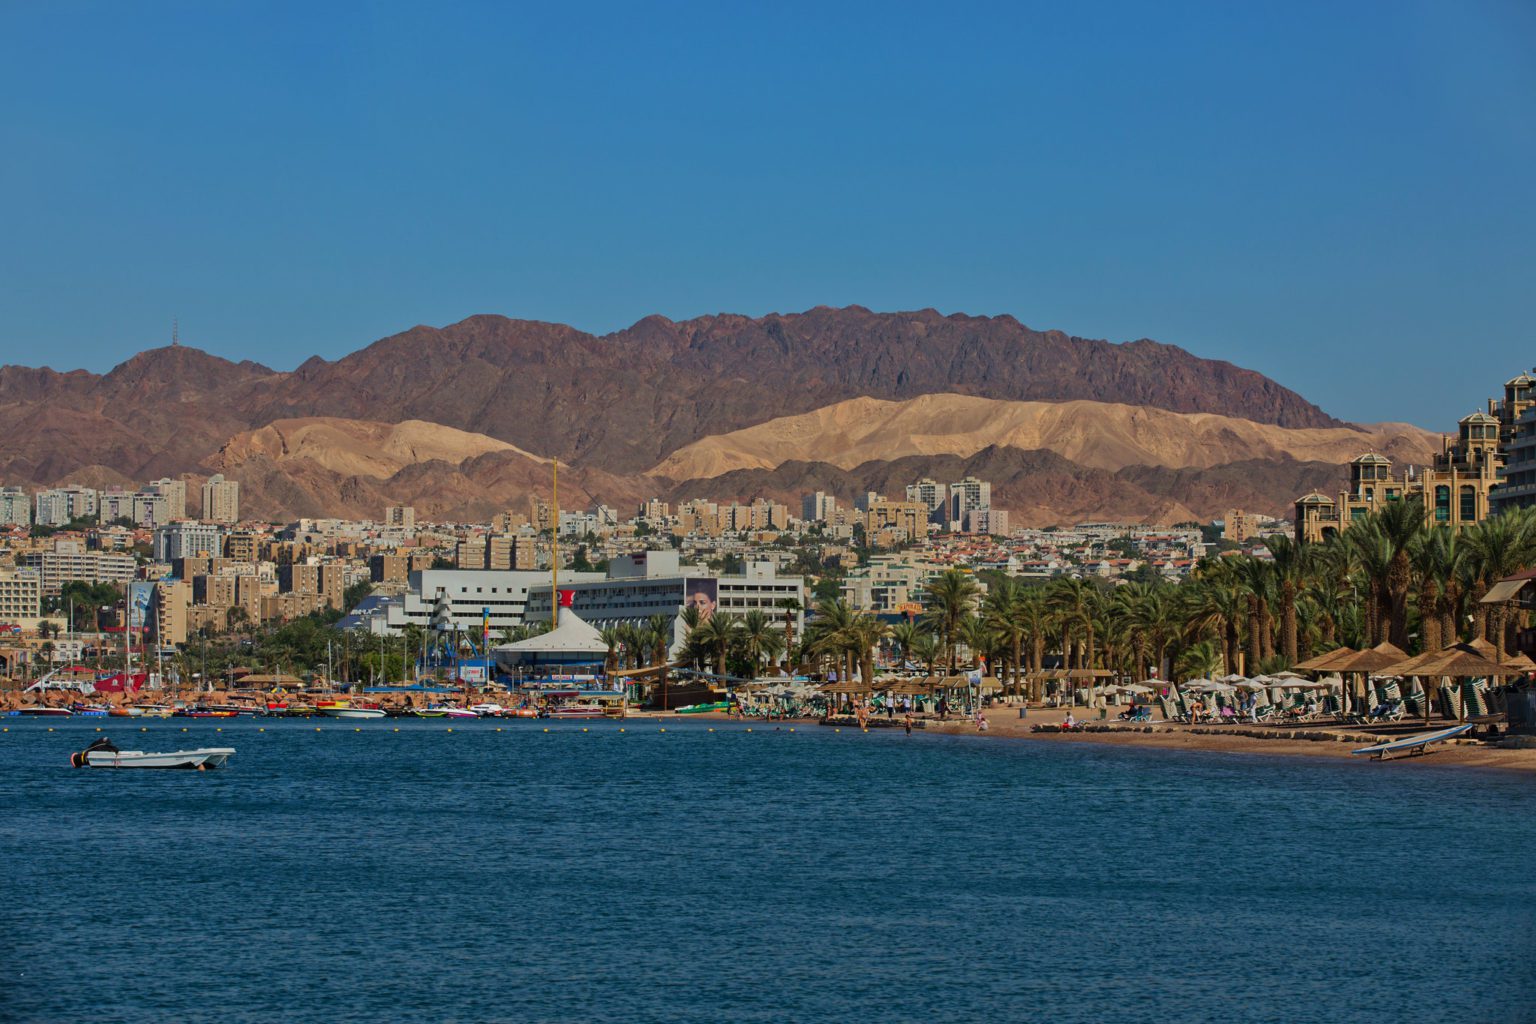 Eilat resort area on Red Sea